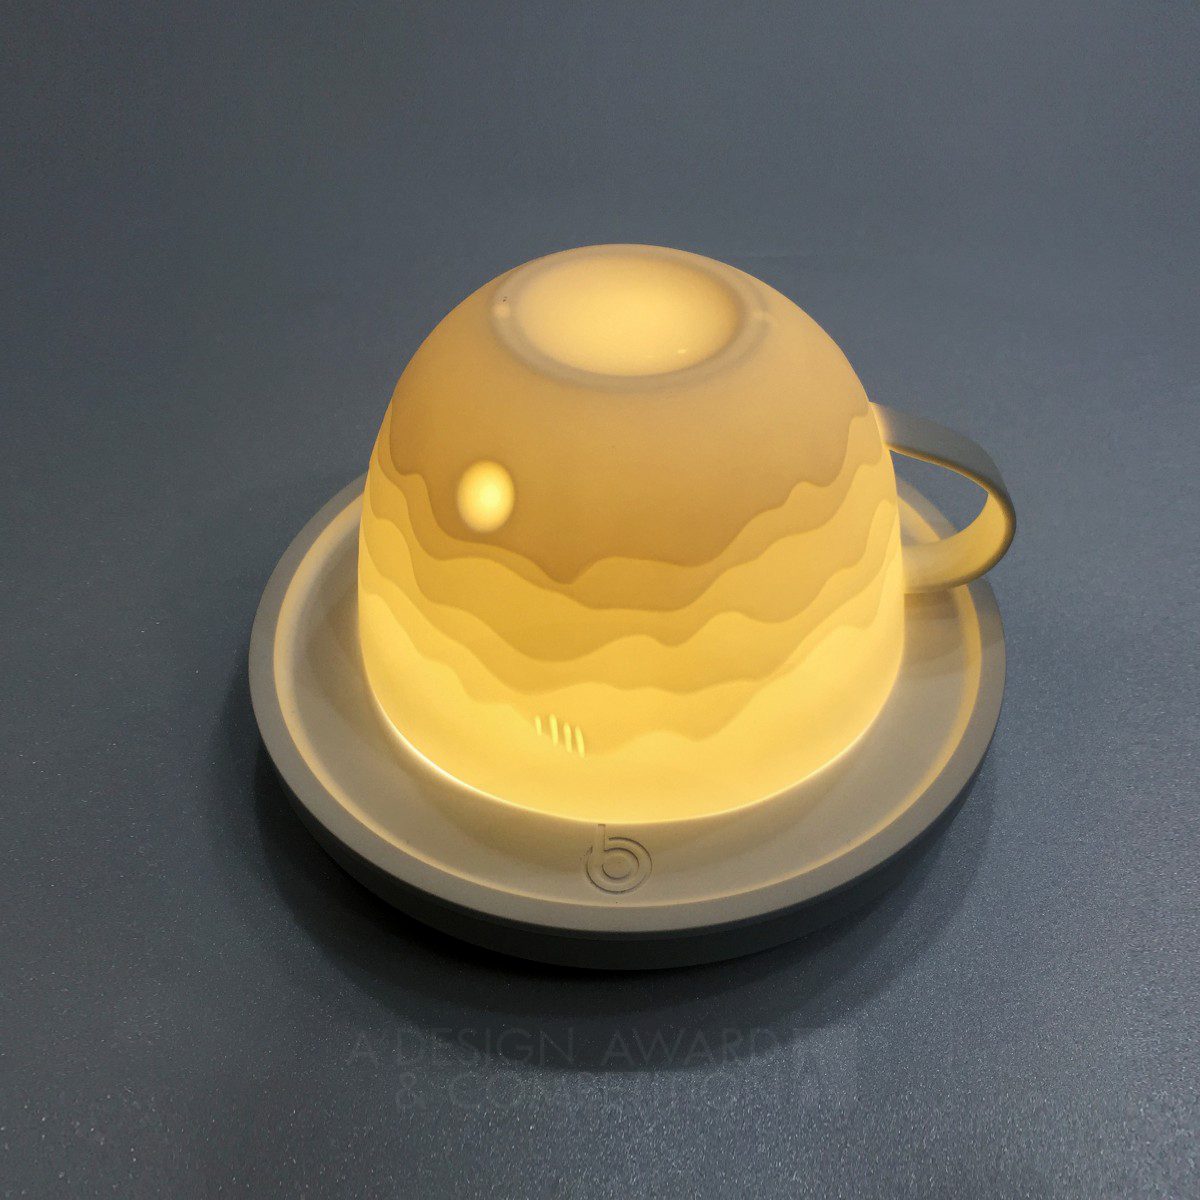 Oriental landscape Lighting cup by Kim